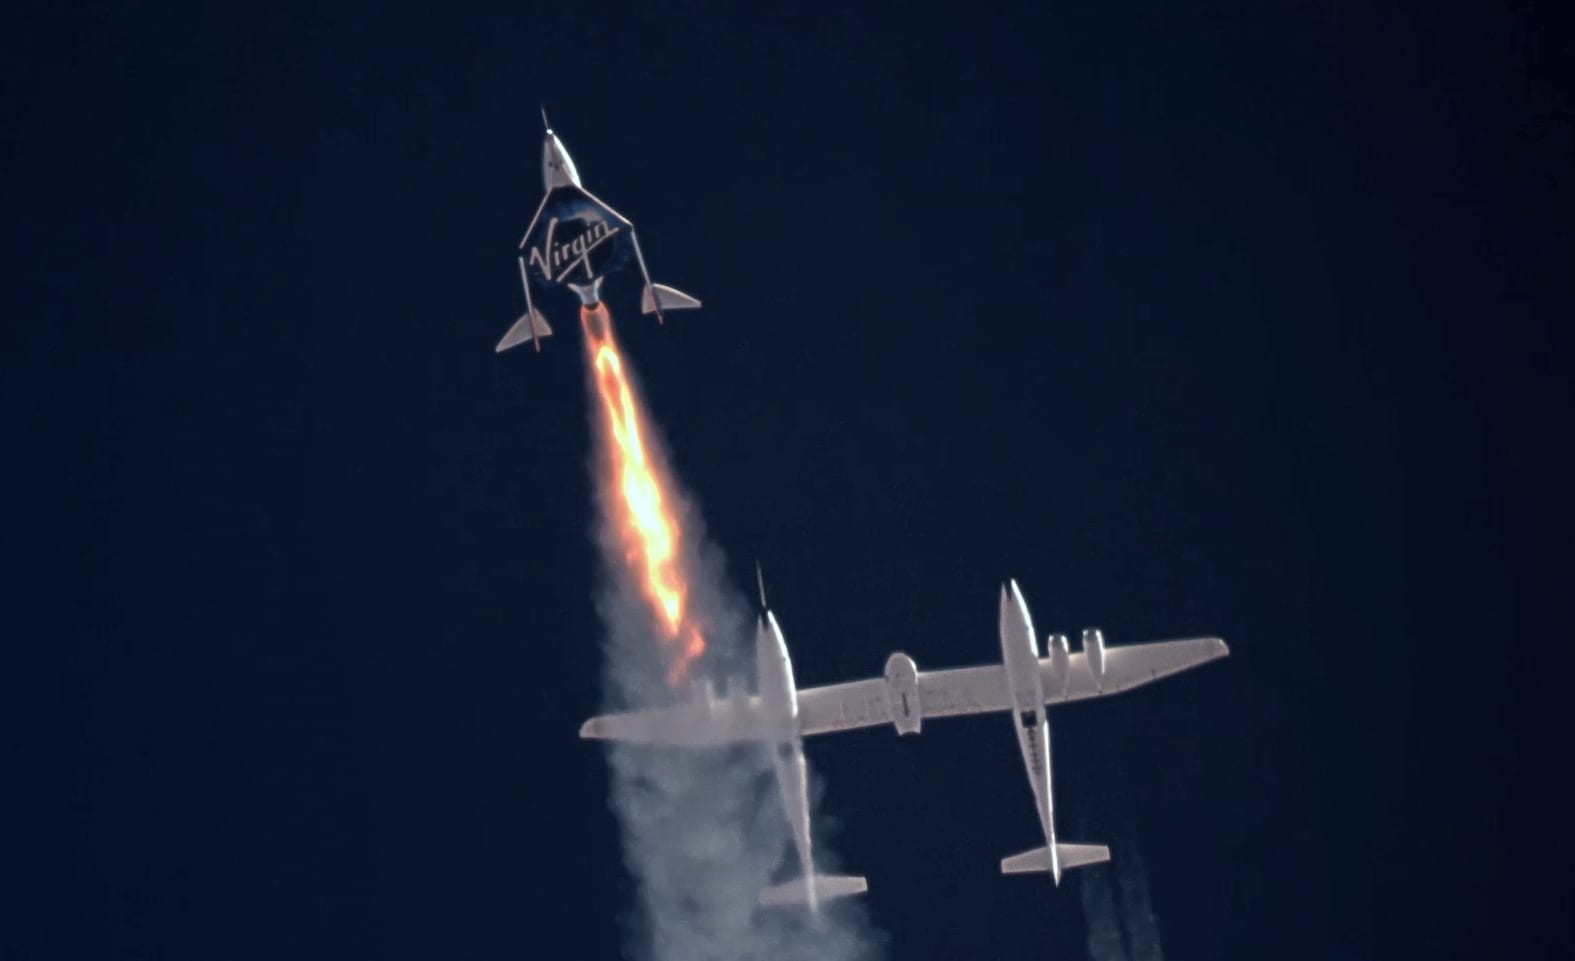 FAA grounds Virgin Galactic spacecraft Branson launch investigation